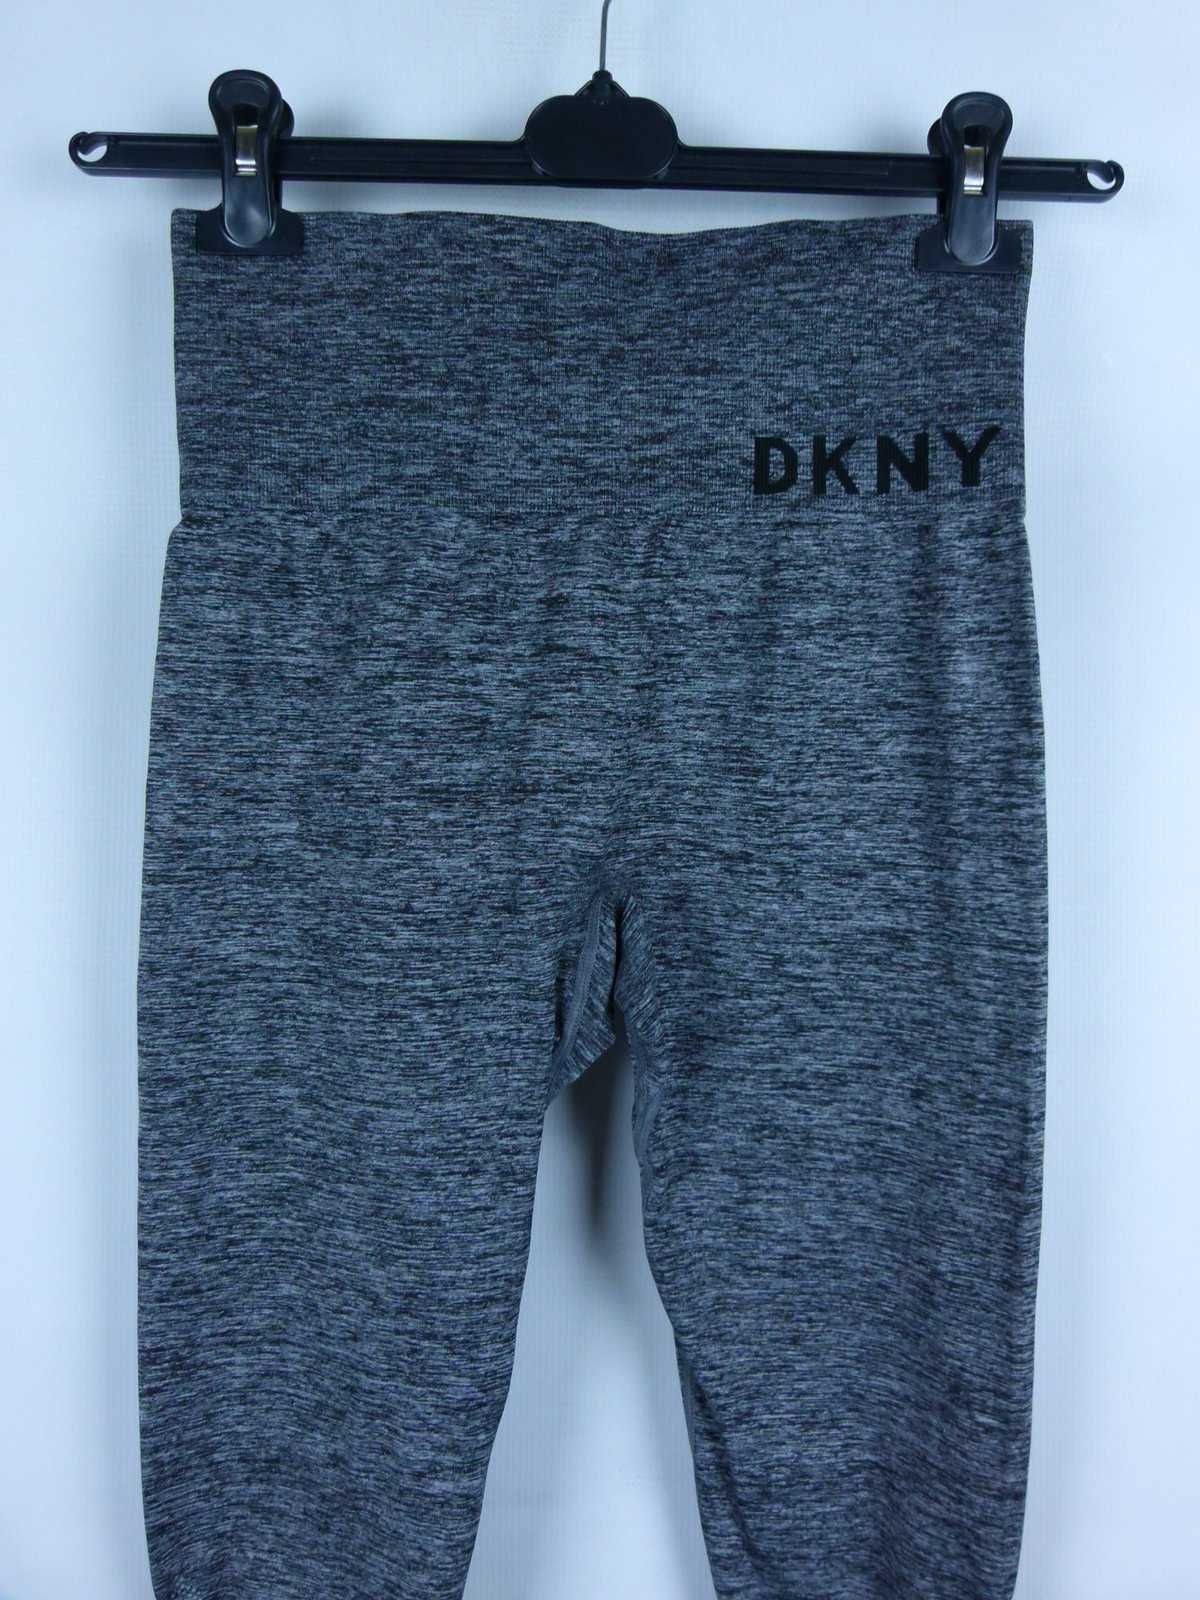 DKNY Sport legginsy 3/4 melanż / S